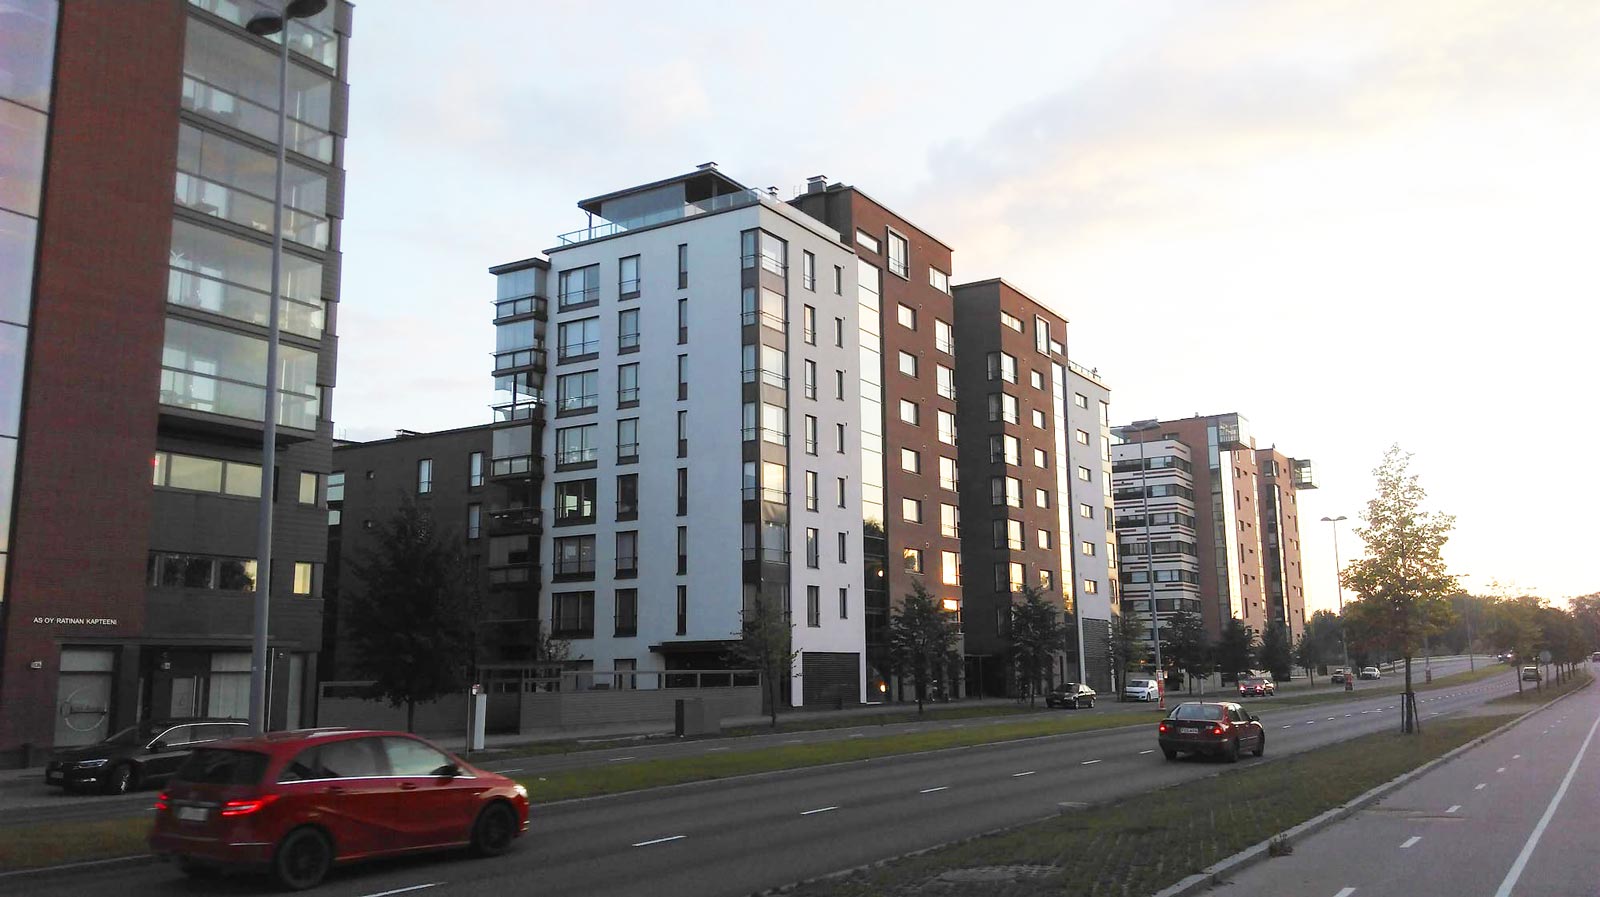 Architecture in Finland - Apartment block